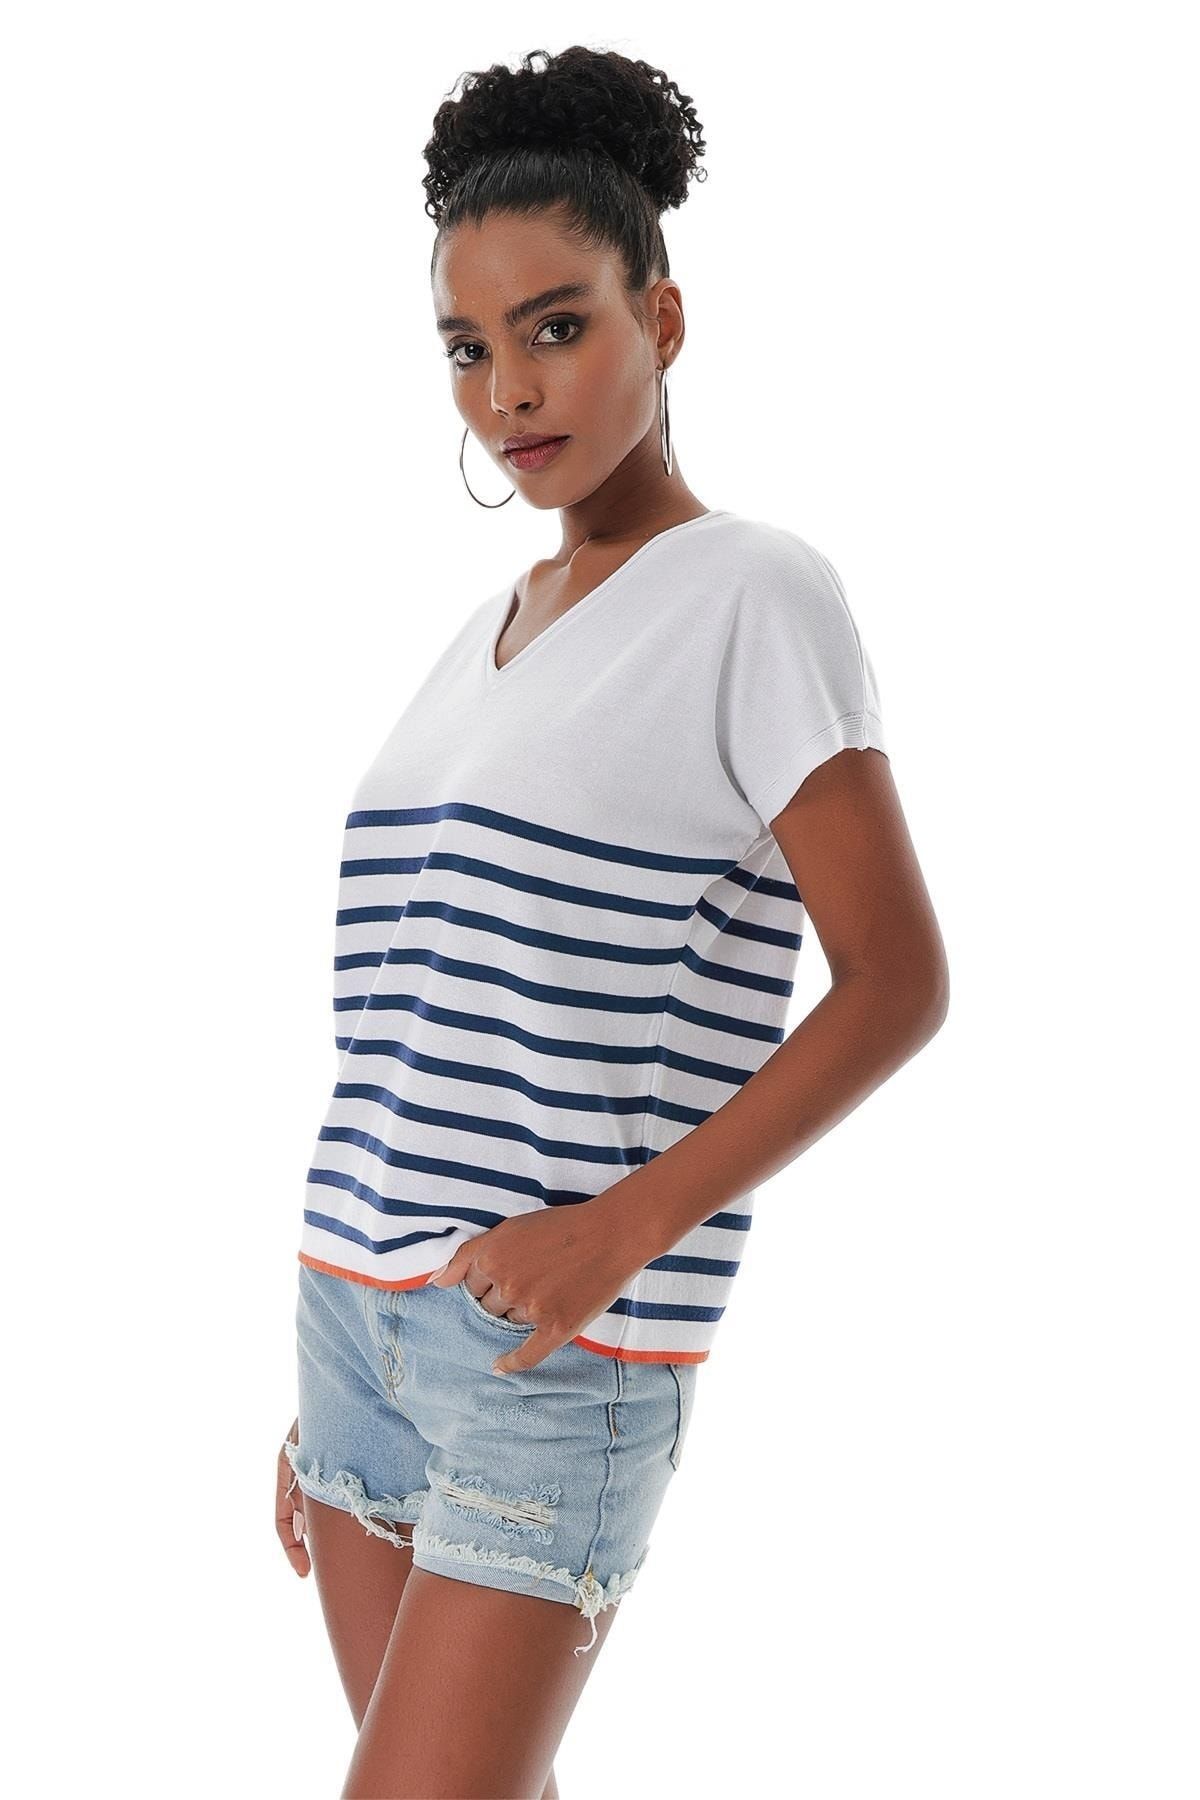 CHUBA Kadın V Yaka Çizgili Rahat Form Marin Kısa Kollu Ince Triko T-shirt Beyaz-navy 23s1009